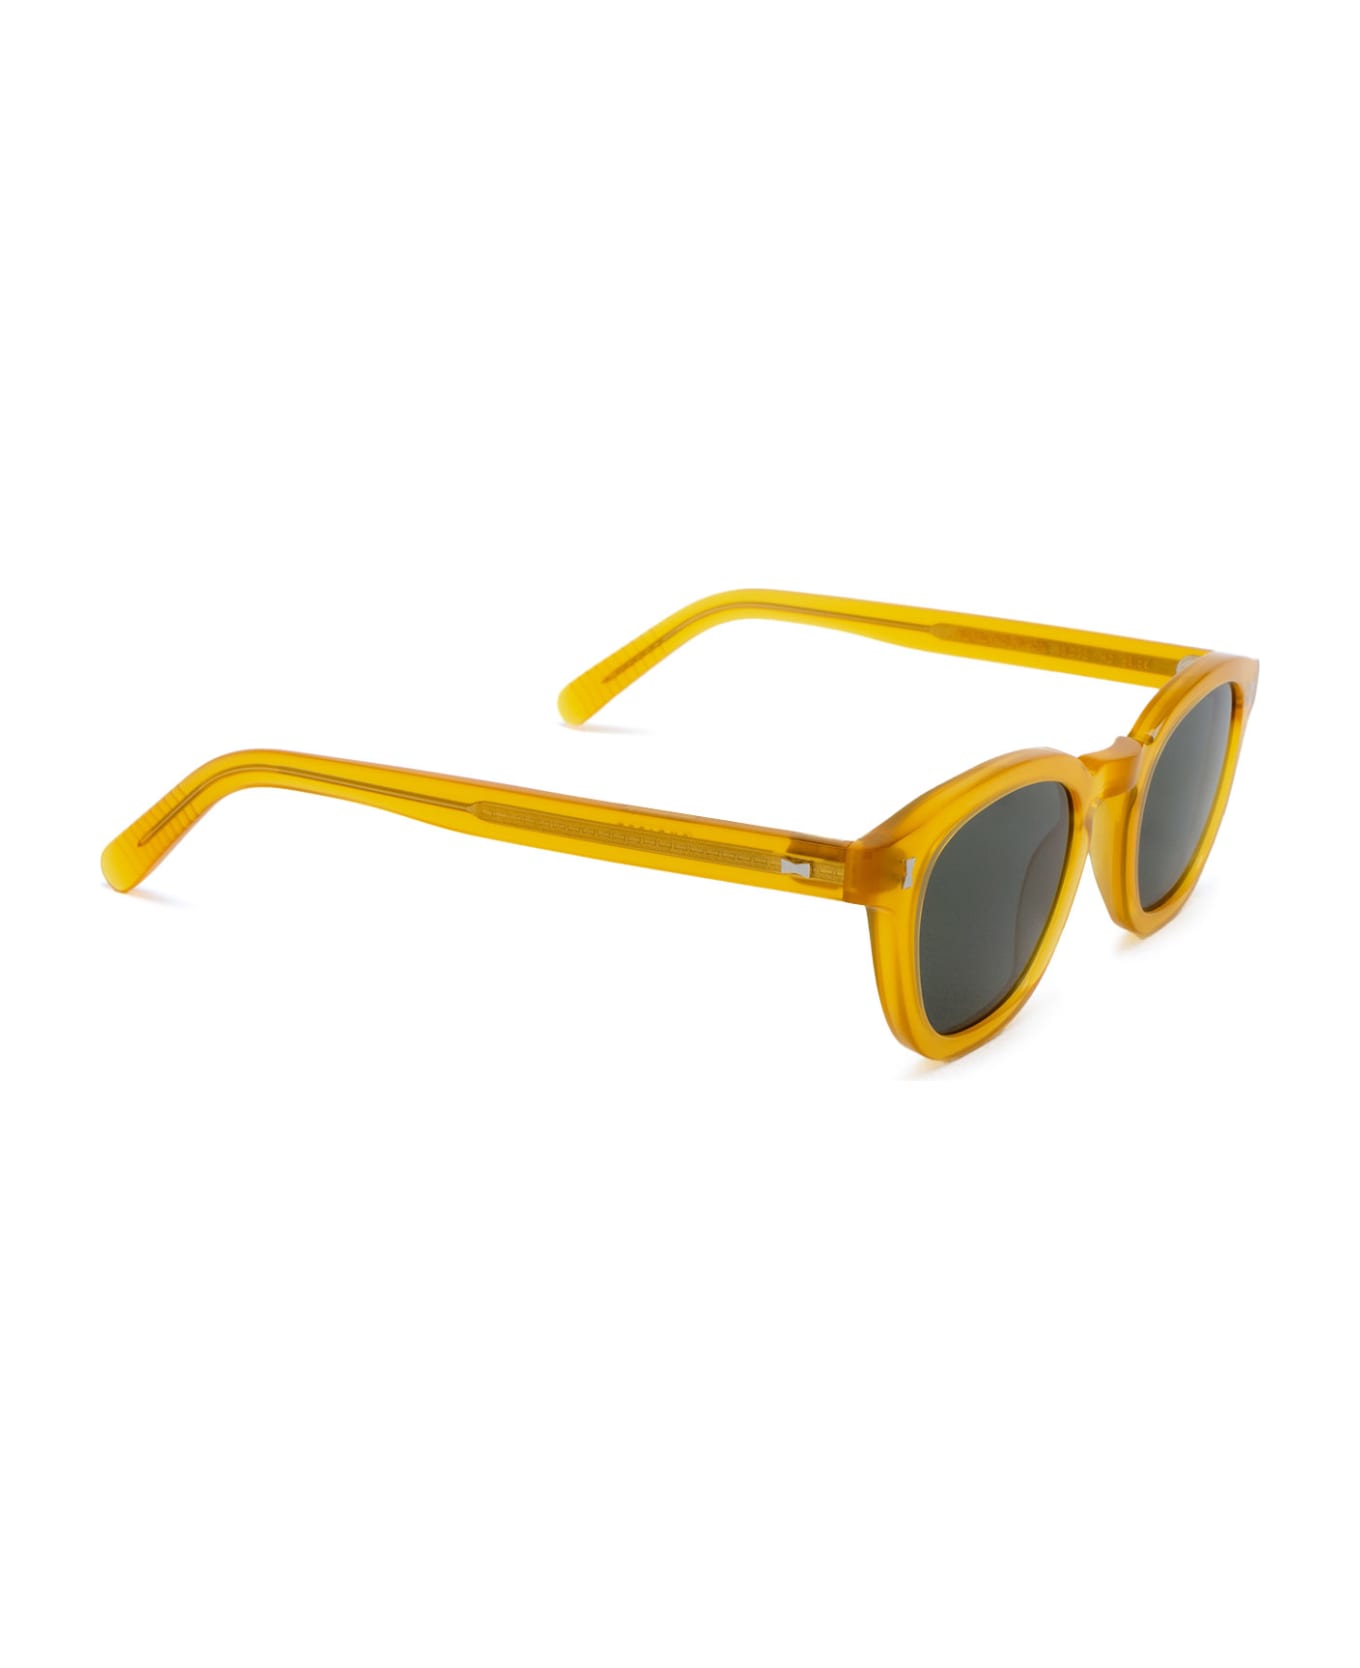 Cubitts Moreland Sun Honey Sunglasses - Honey